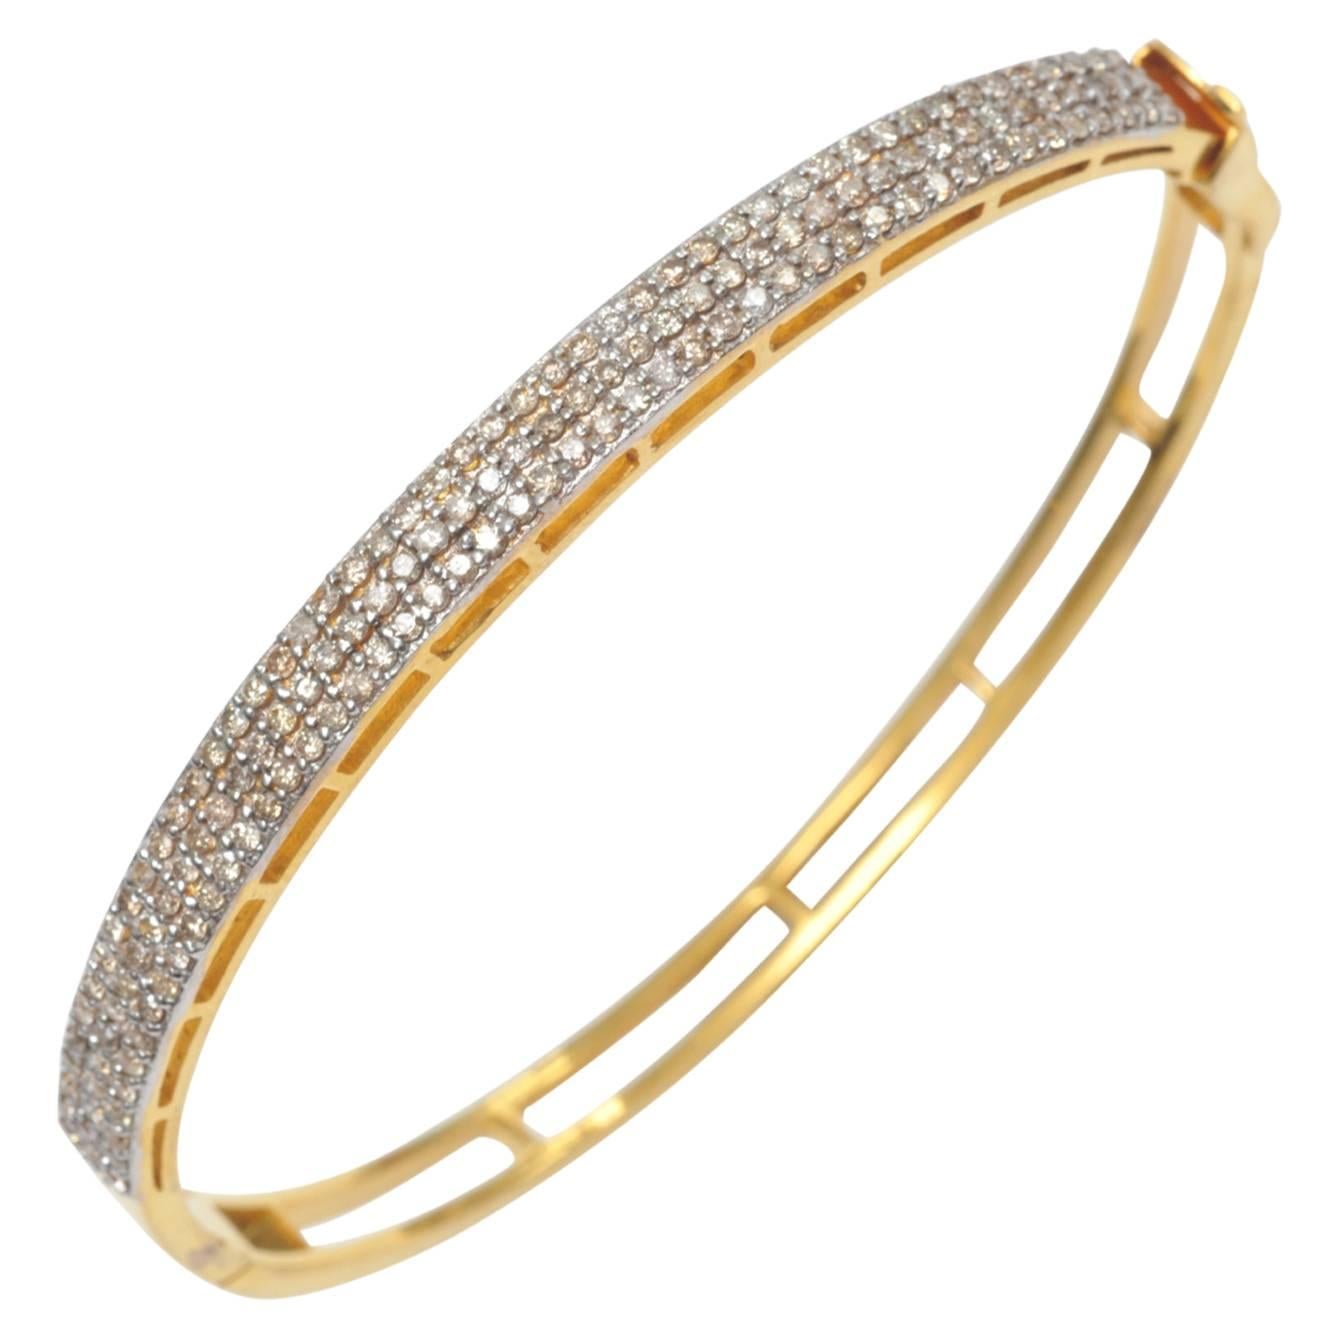 22 Karat Gold and Diamond Bracelet